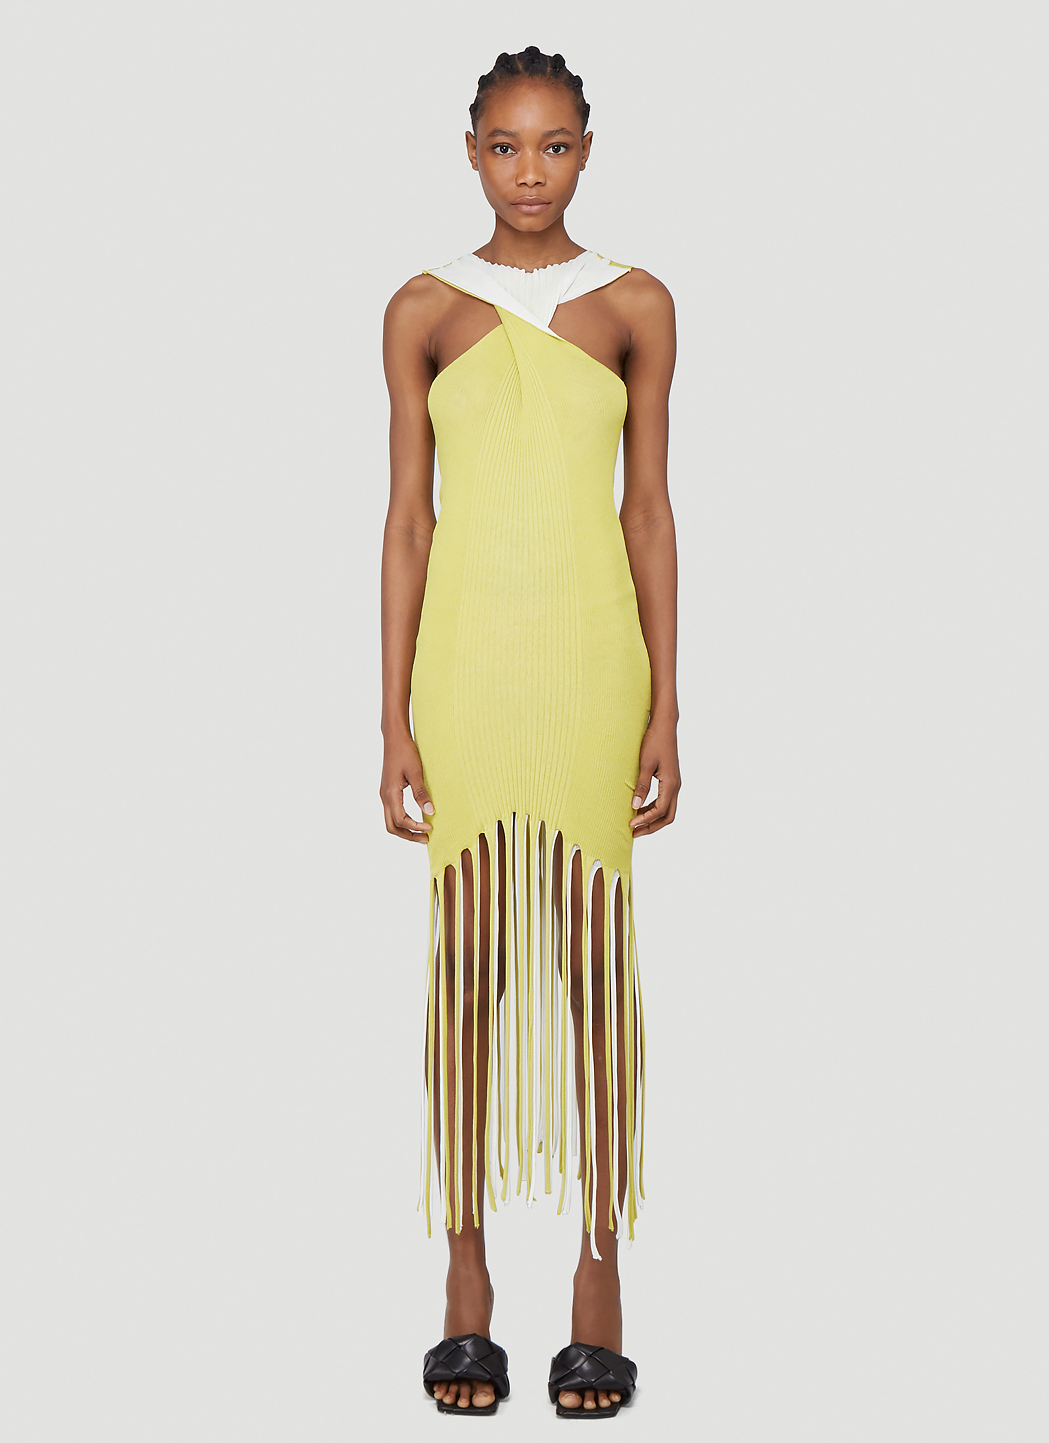 Bottega Veneta Fringed Dress in Yellow | LN-CC